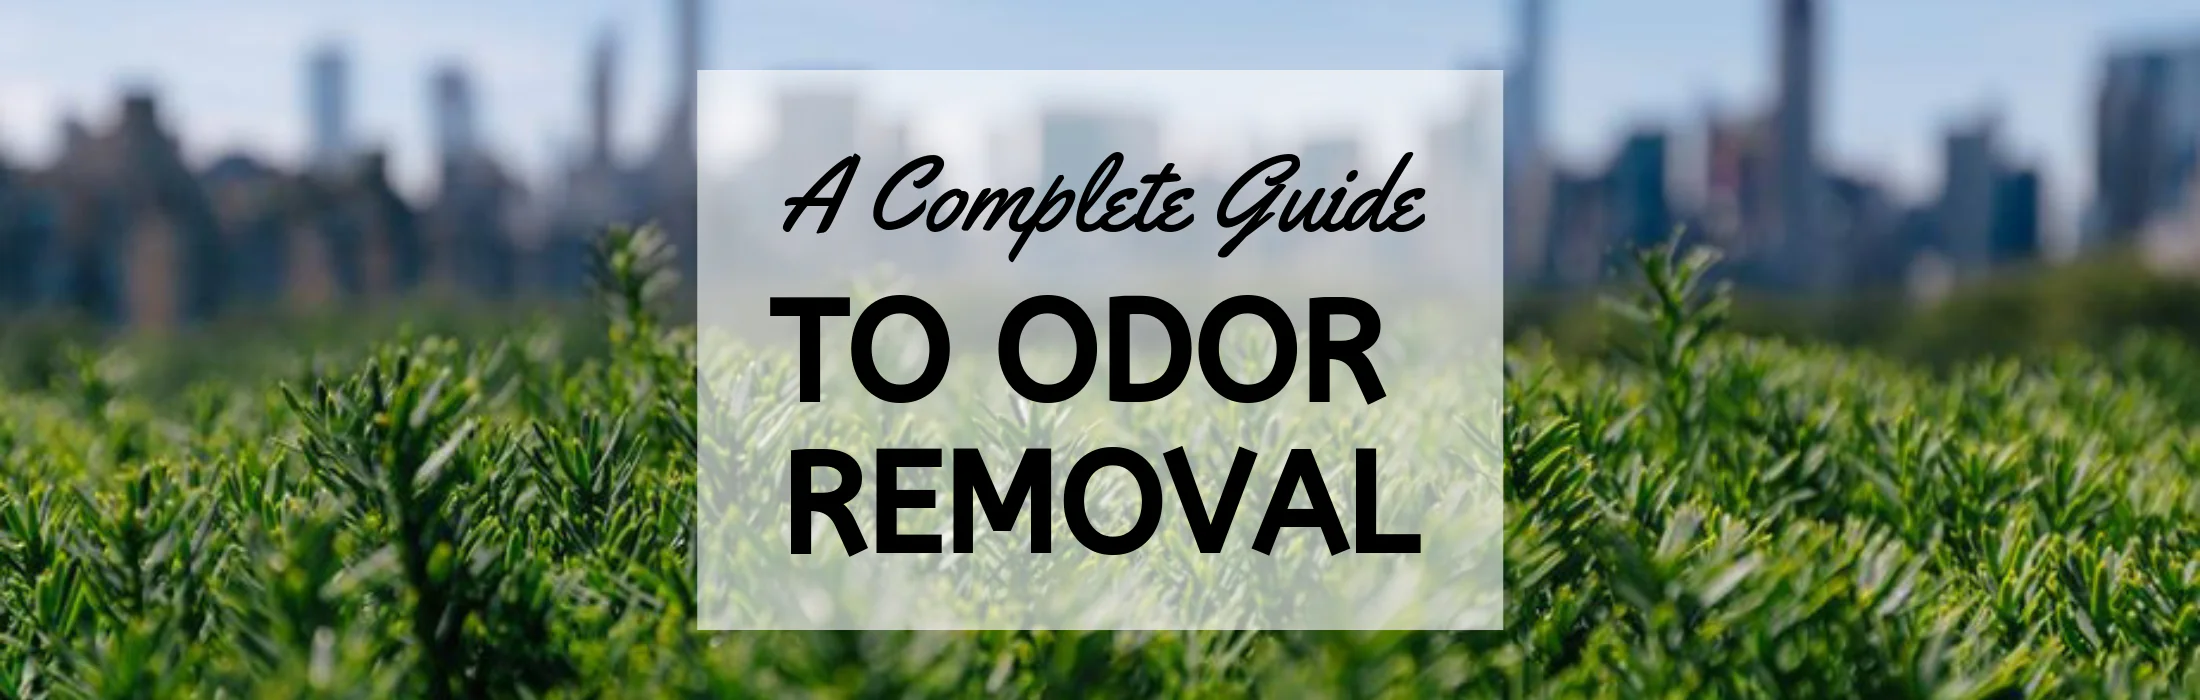 Odor Removal Services